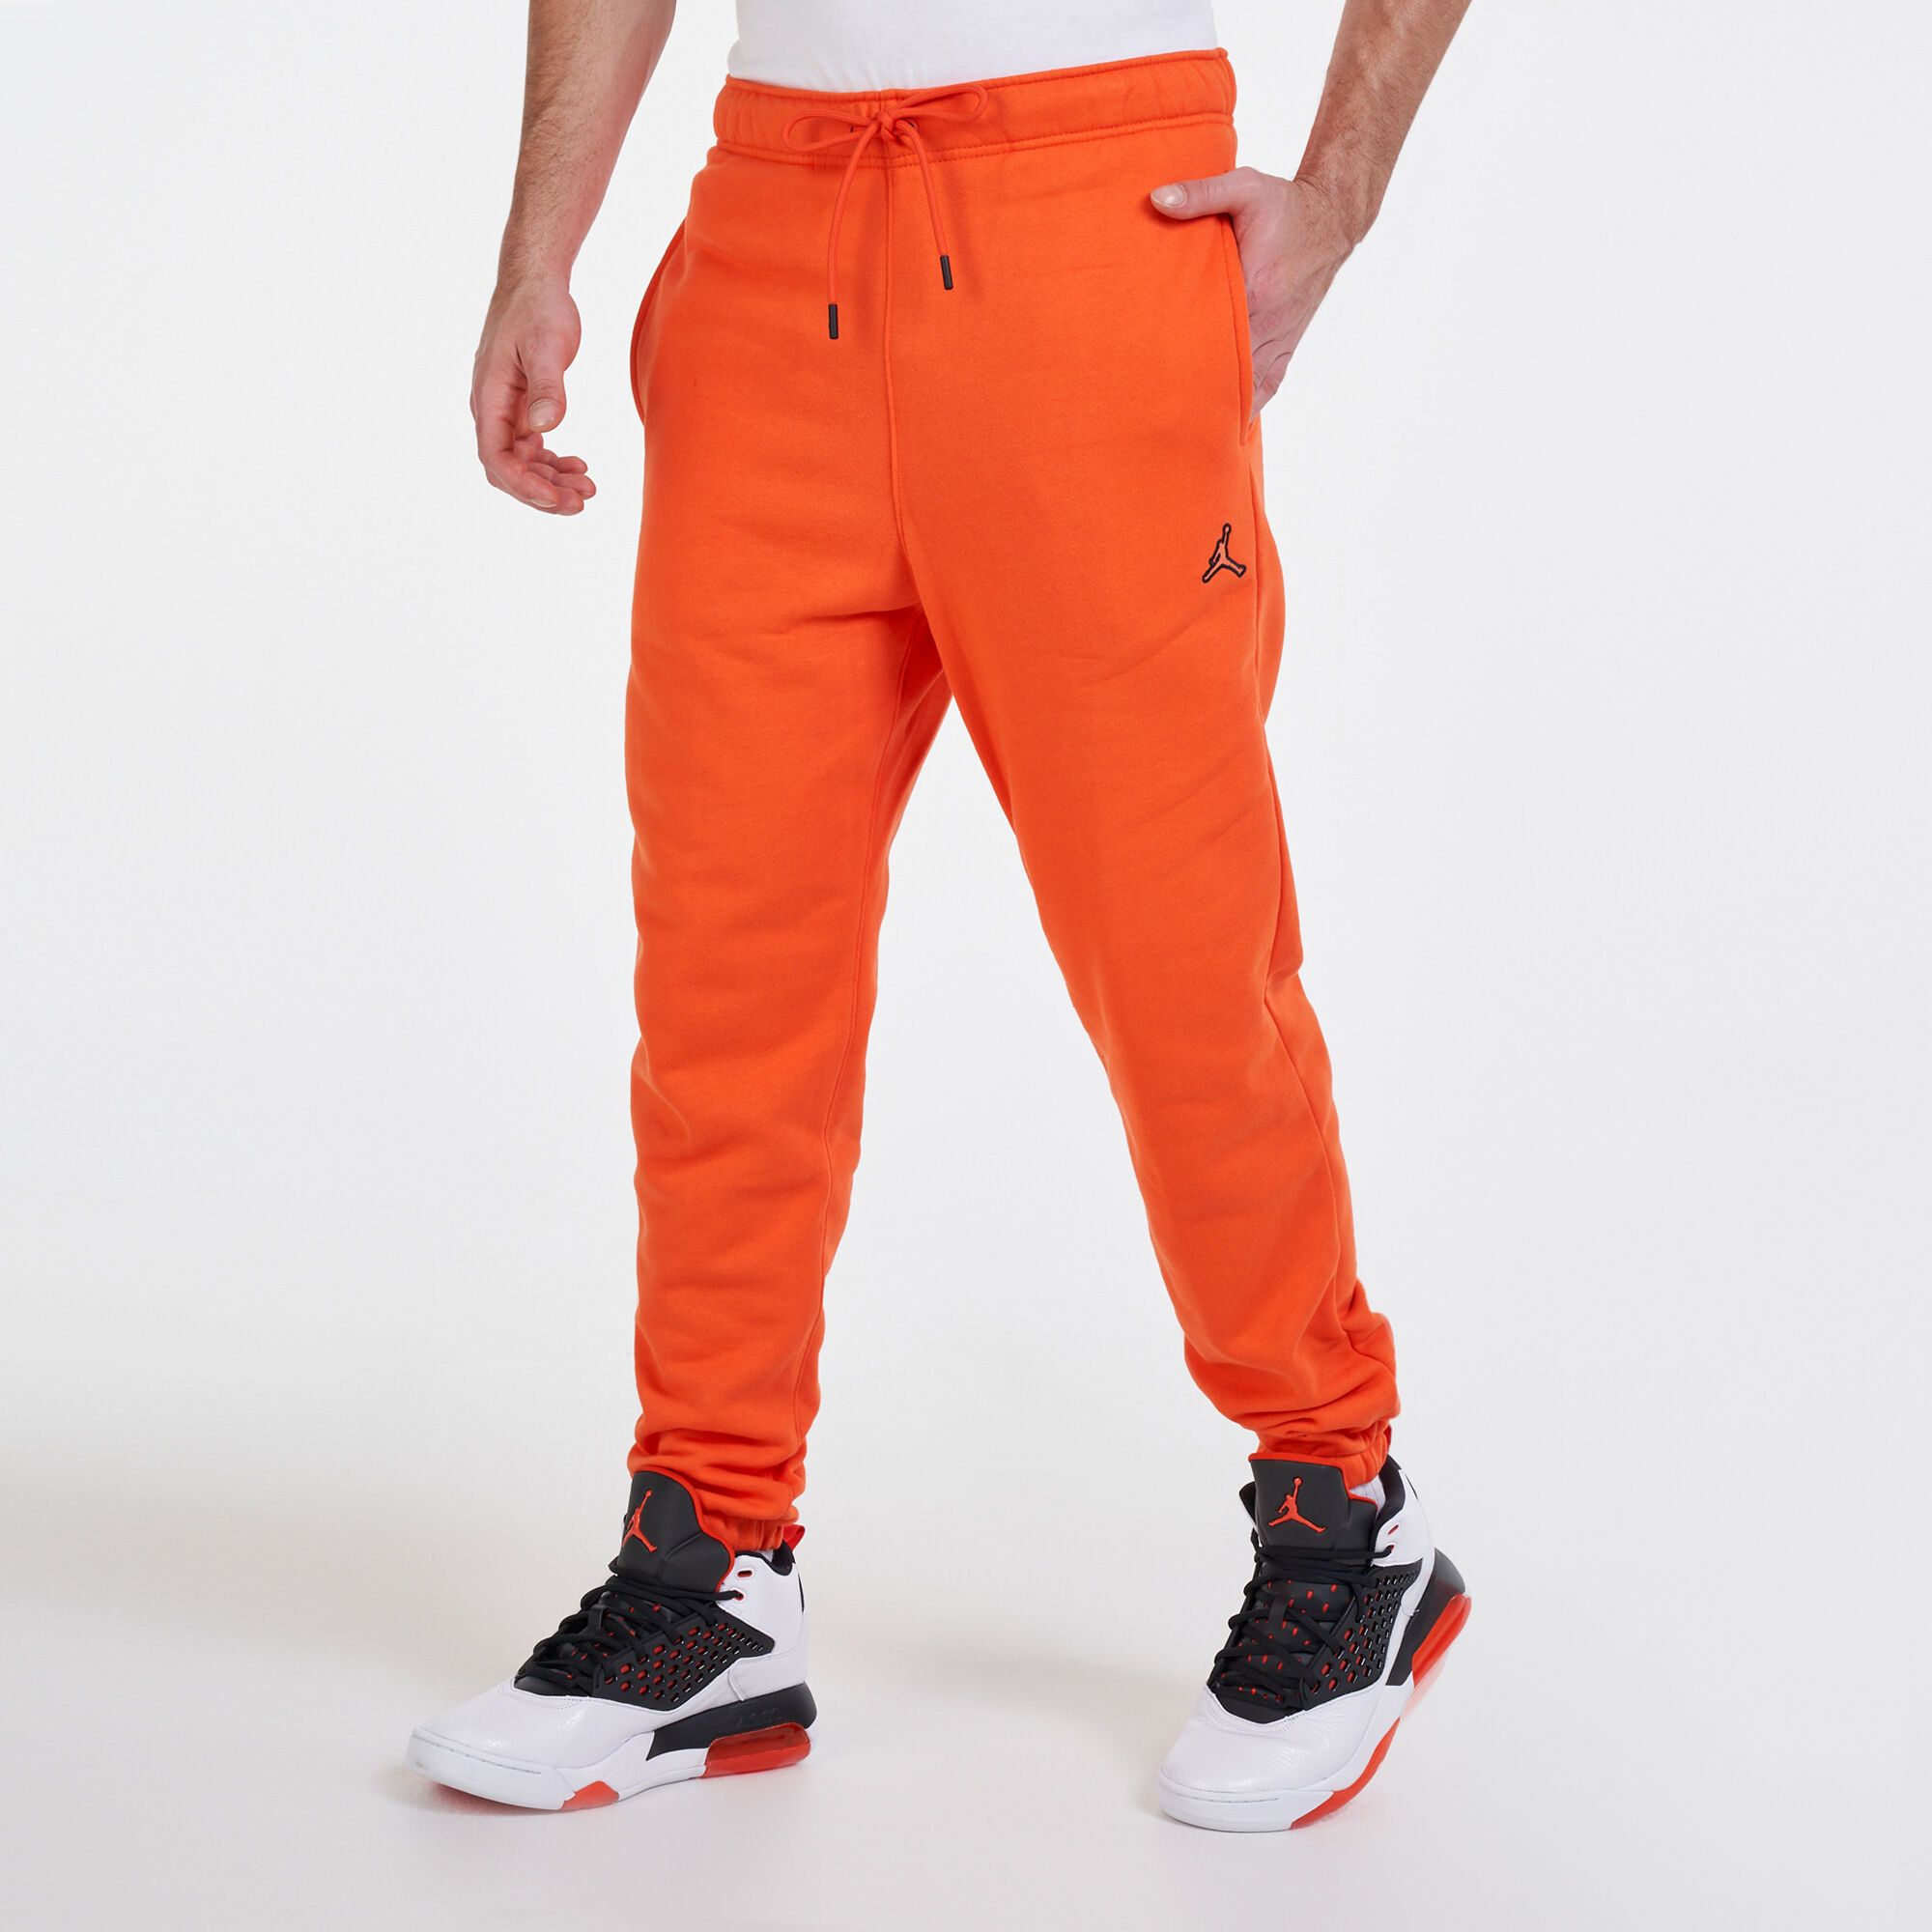 Jordan / Dri-FIT Sport Crossover Men's Fleece Pants